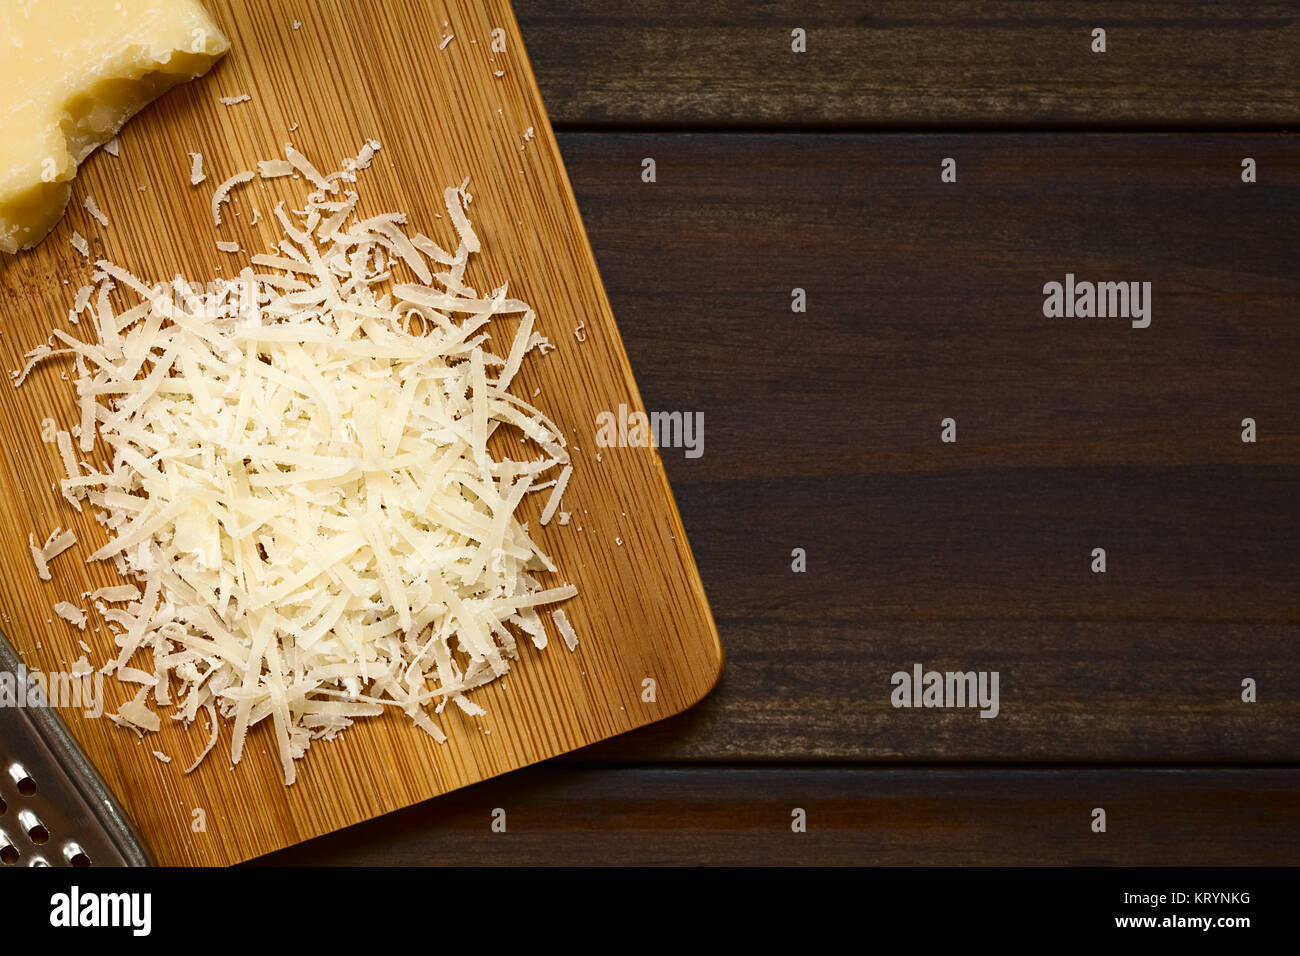 Grated Parmesan-like Hard Cheese Stock Photo